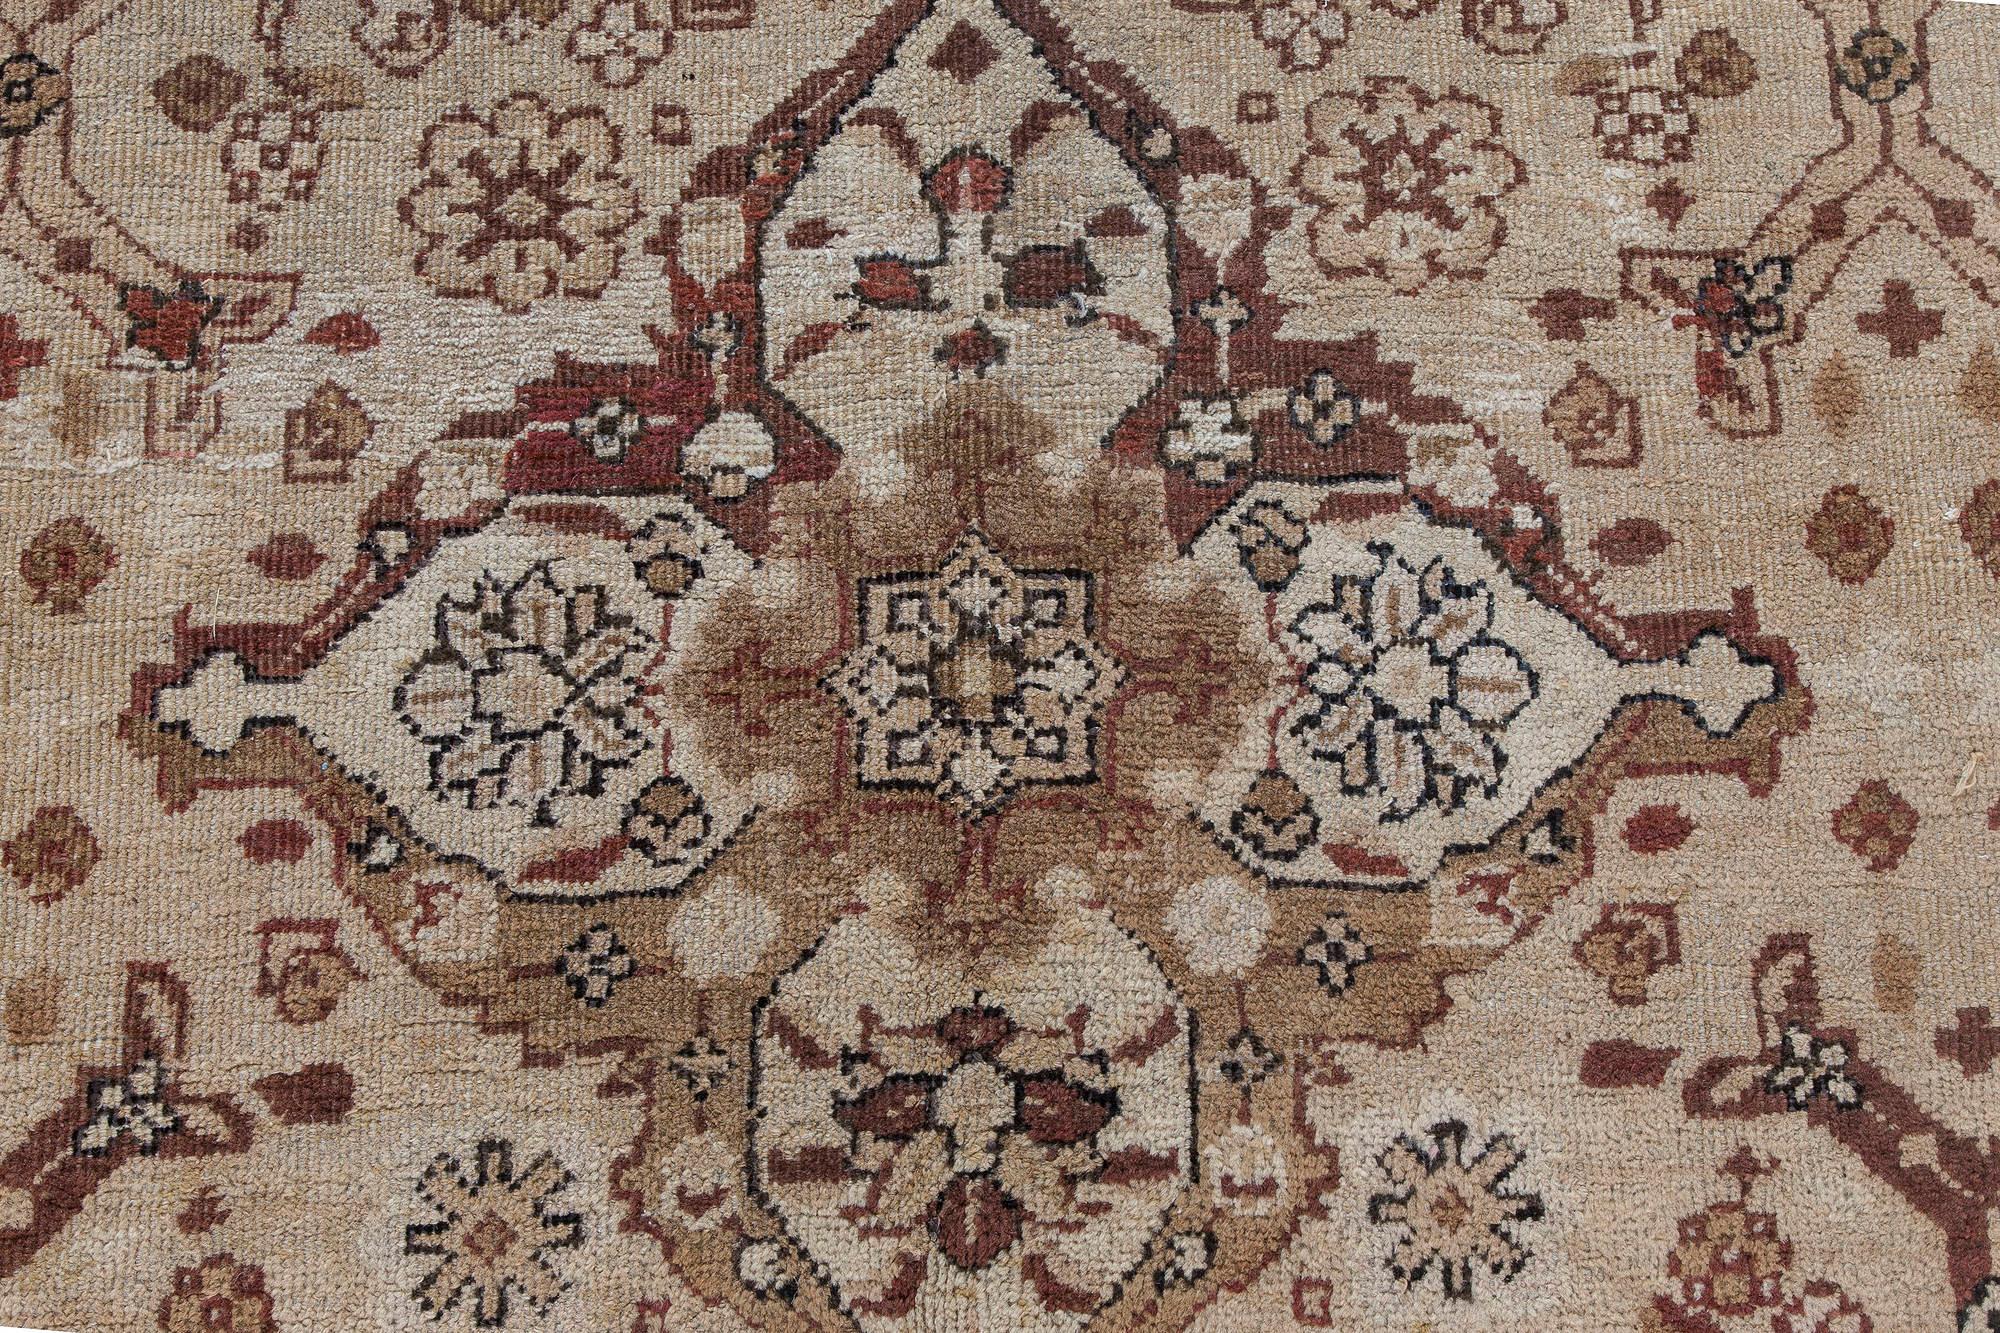 Antique Indian Amritsar beige, brown handmade wool carpet
Size: 8'9